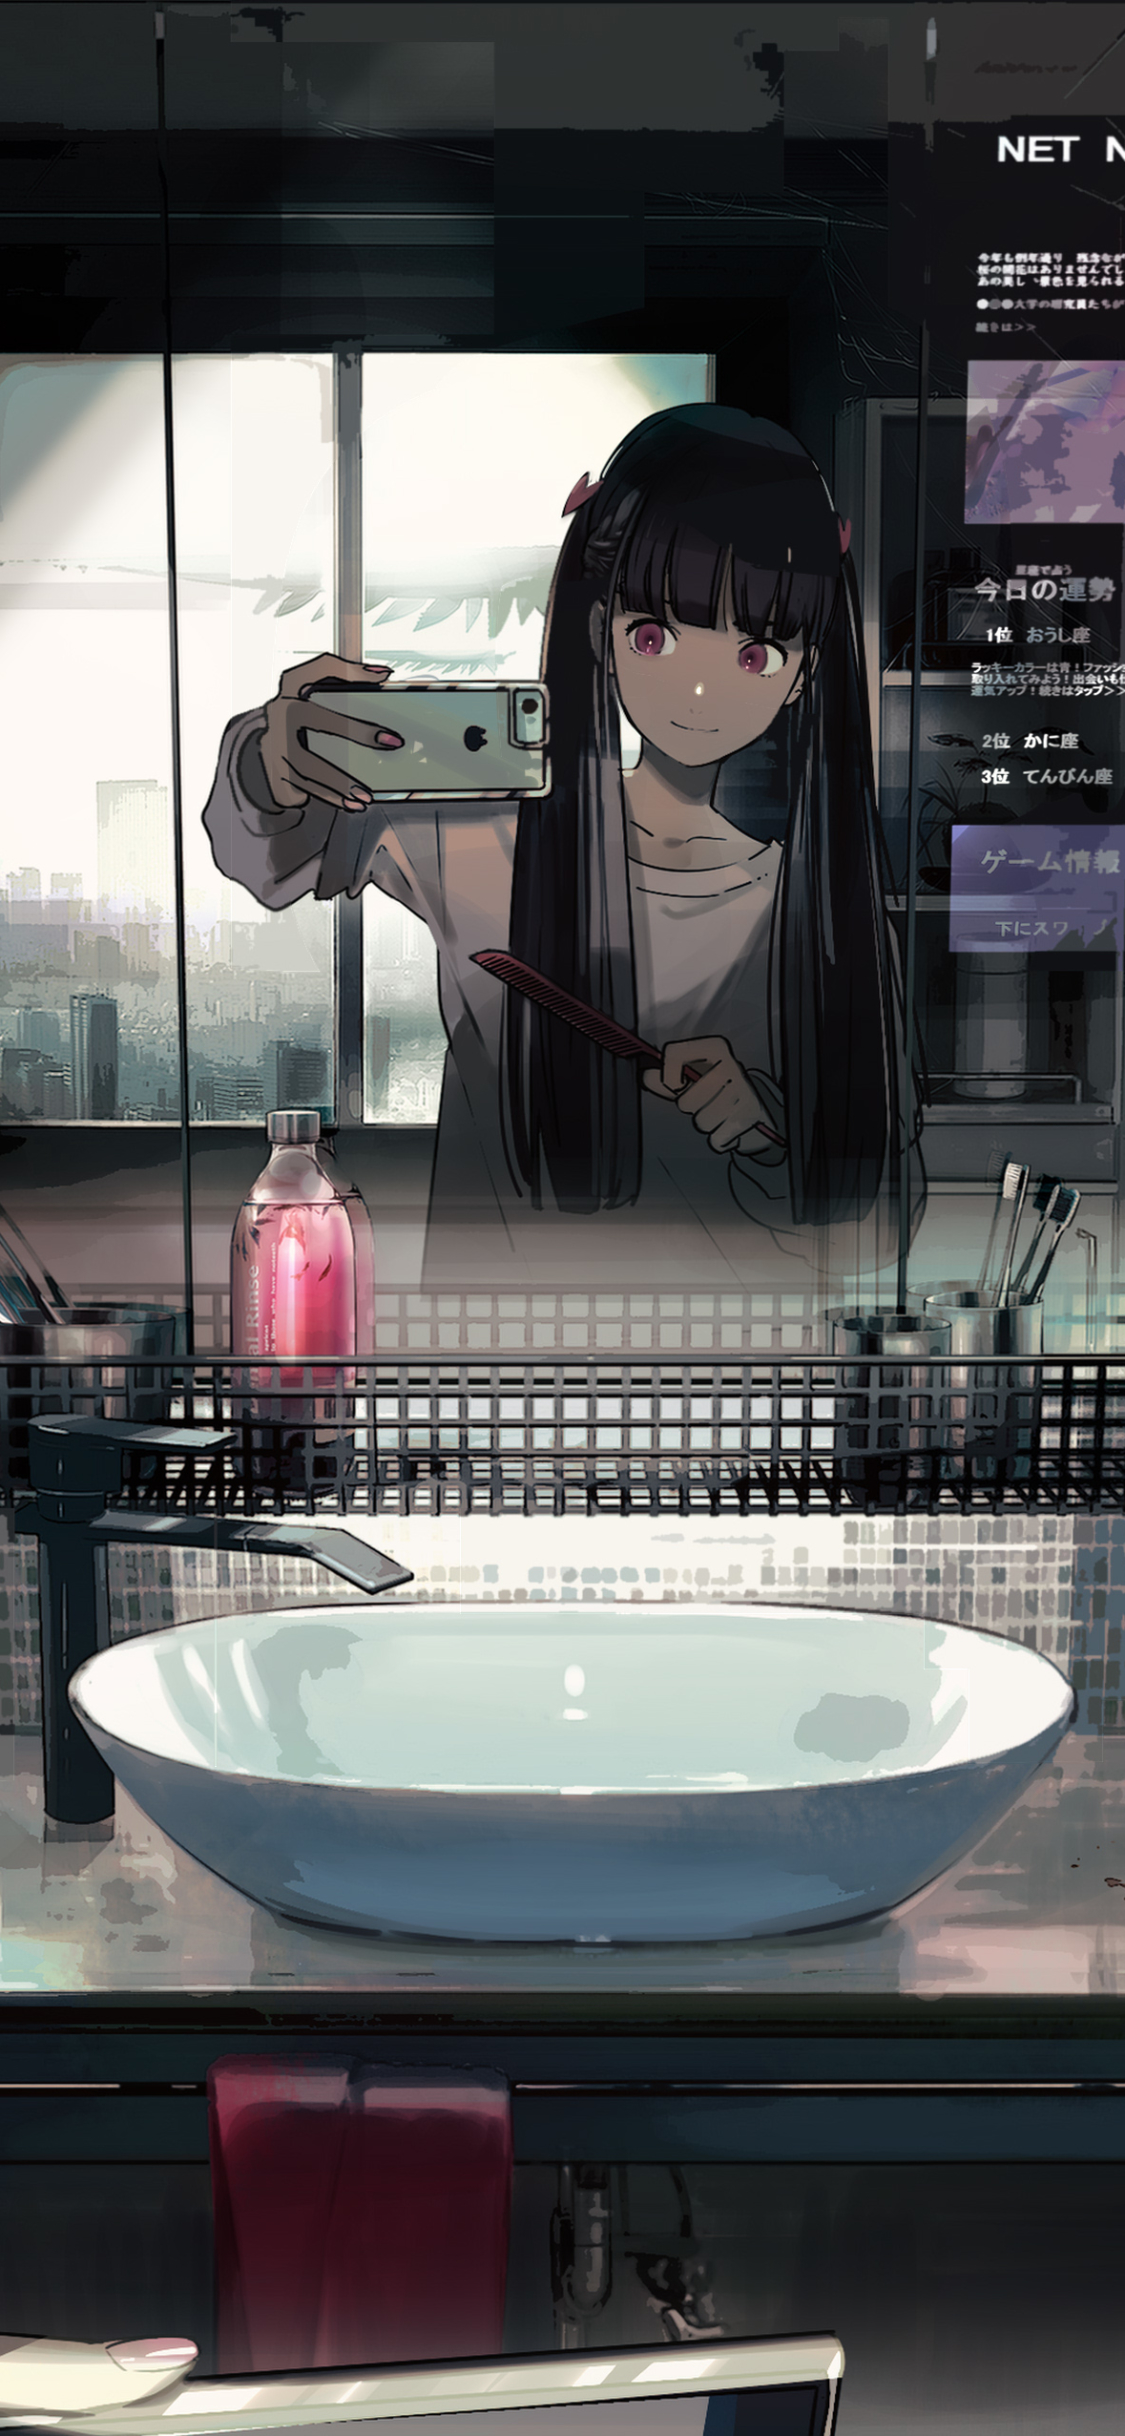 Anime Room Phone Wallpaper by kukka